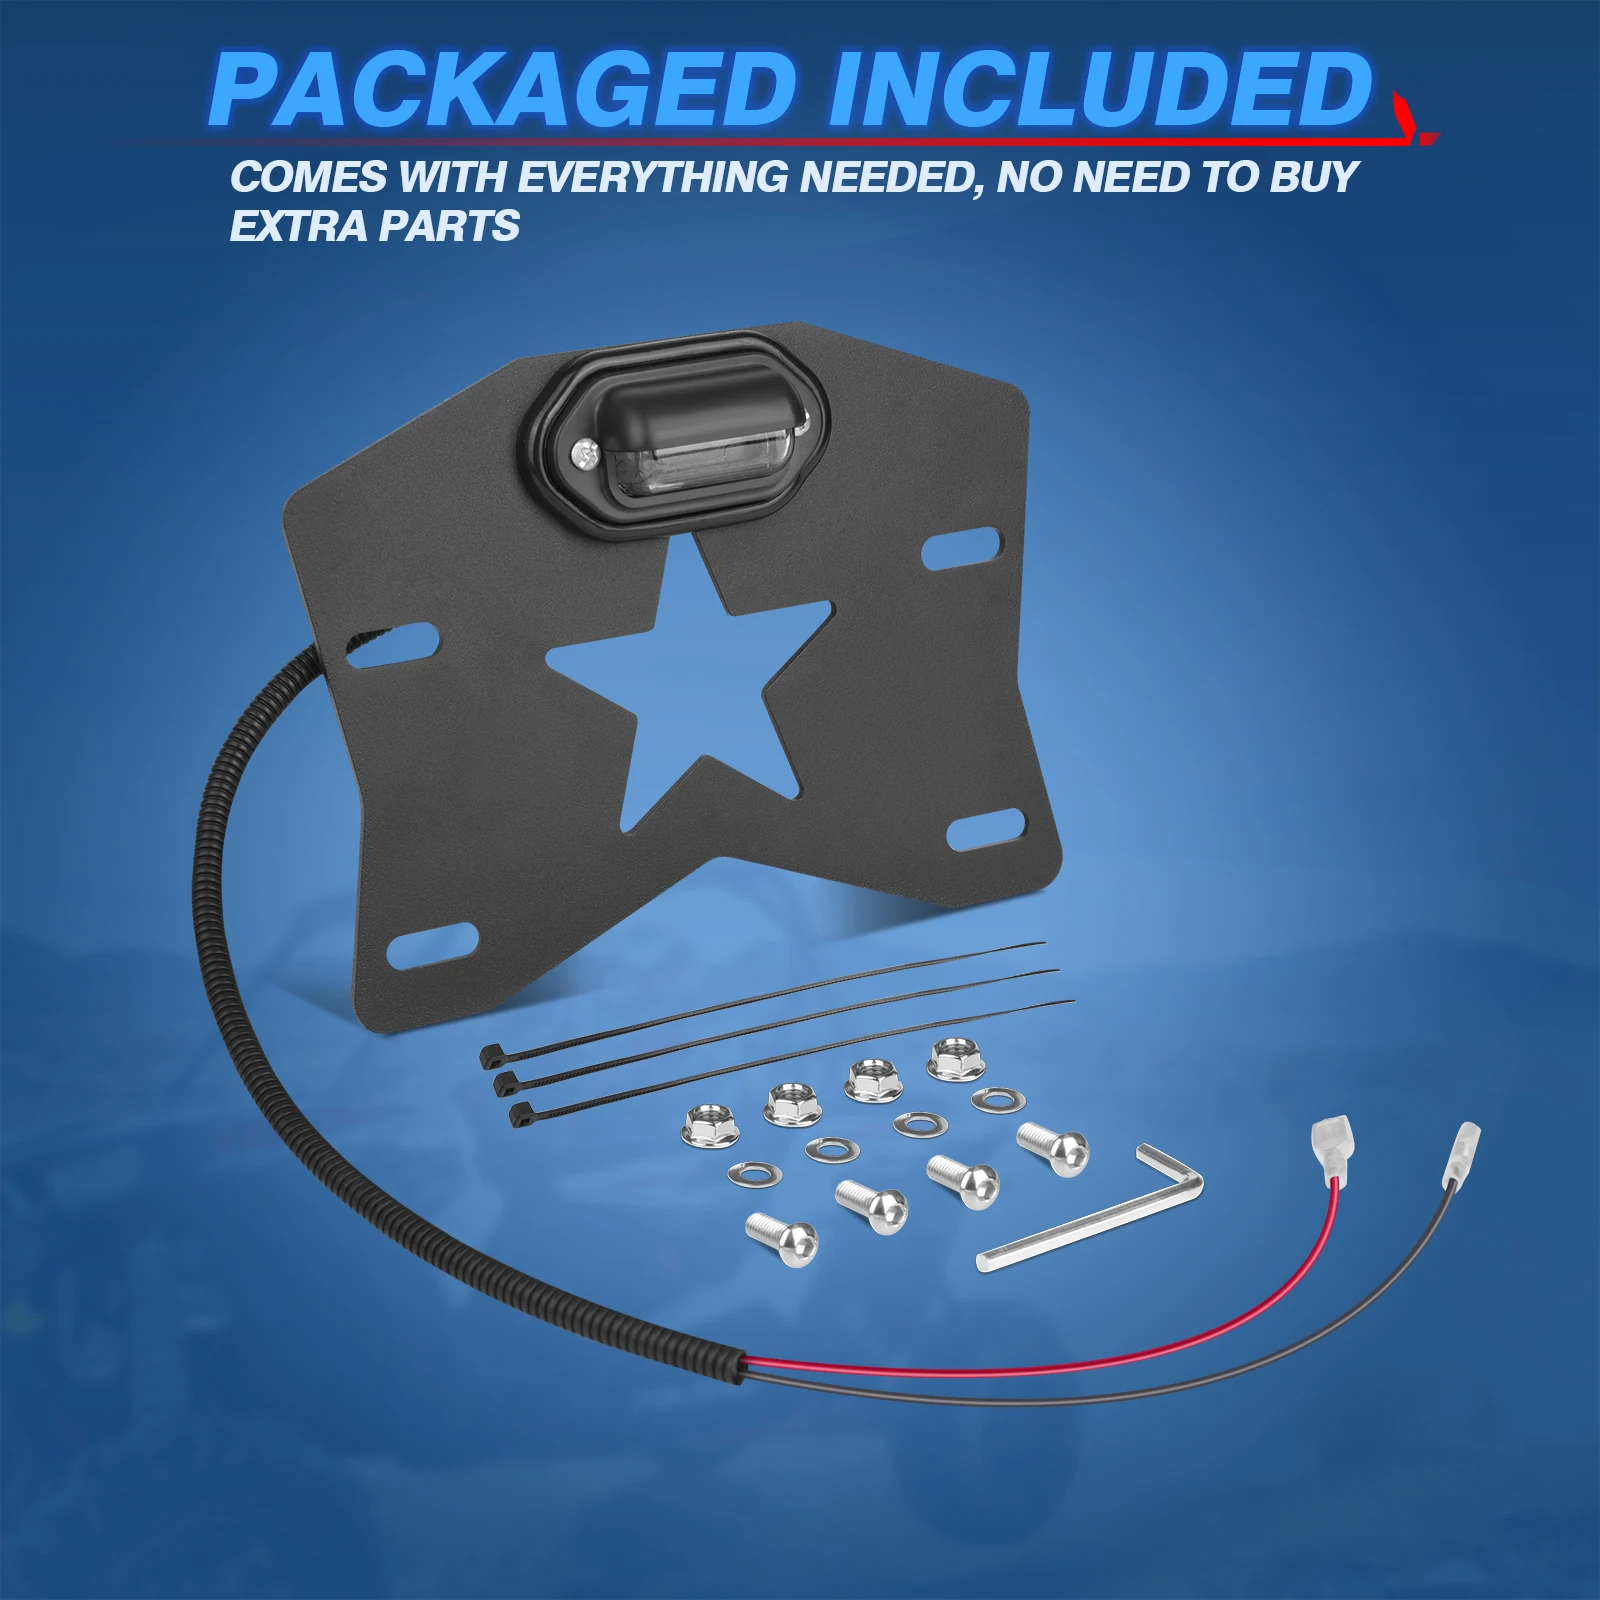 MICTUNING ATV/UTV Parts Accessories Led Light License Plate Frame Holder Mounting Bracket